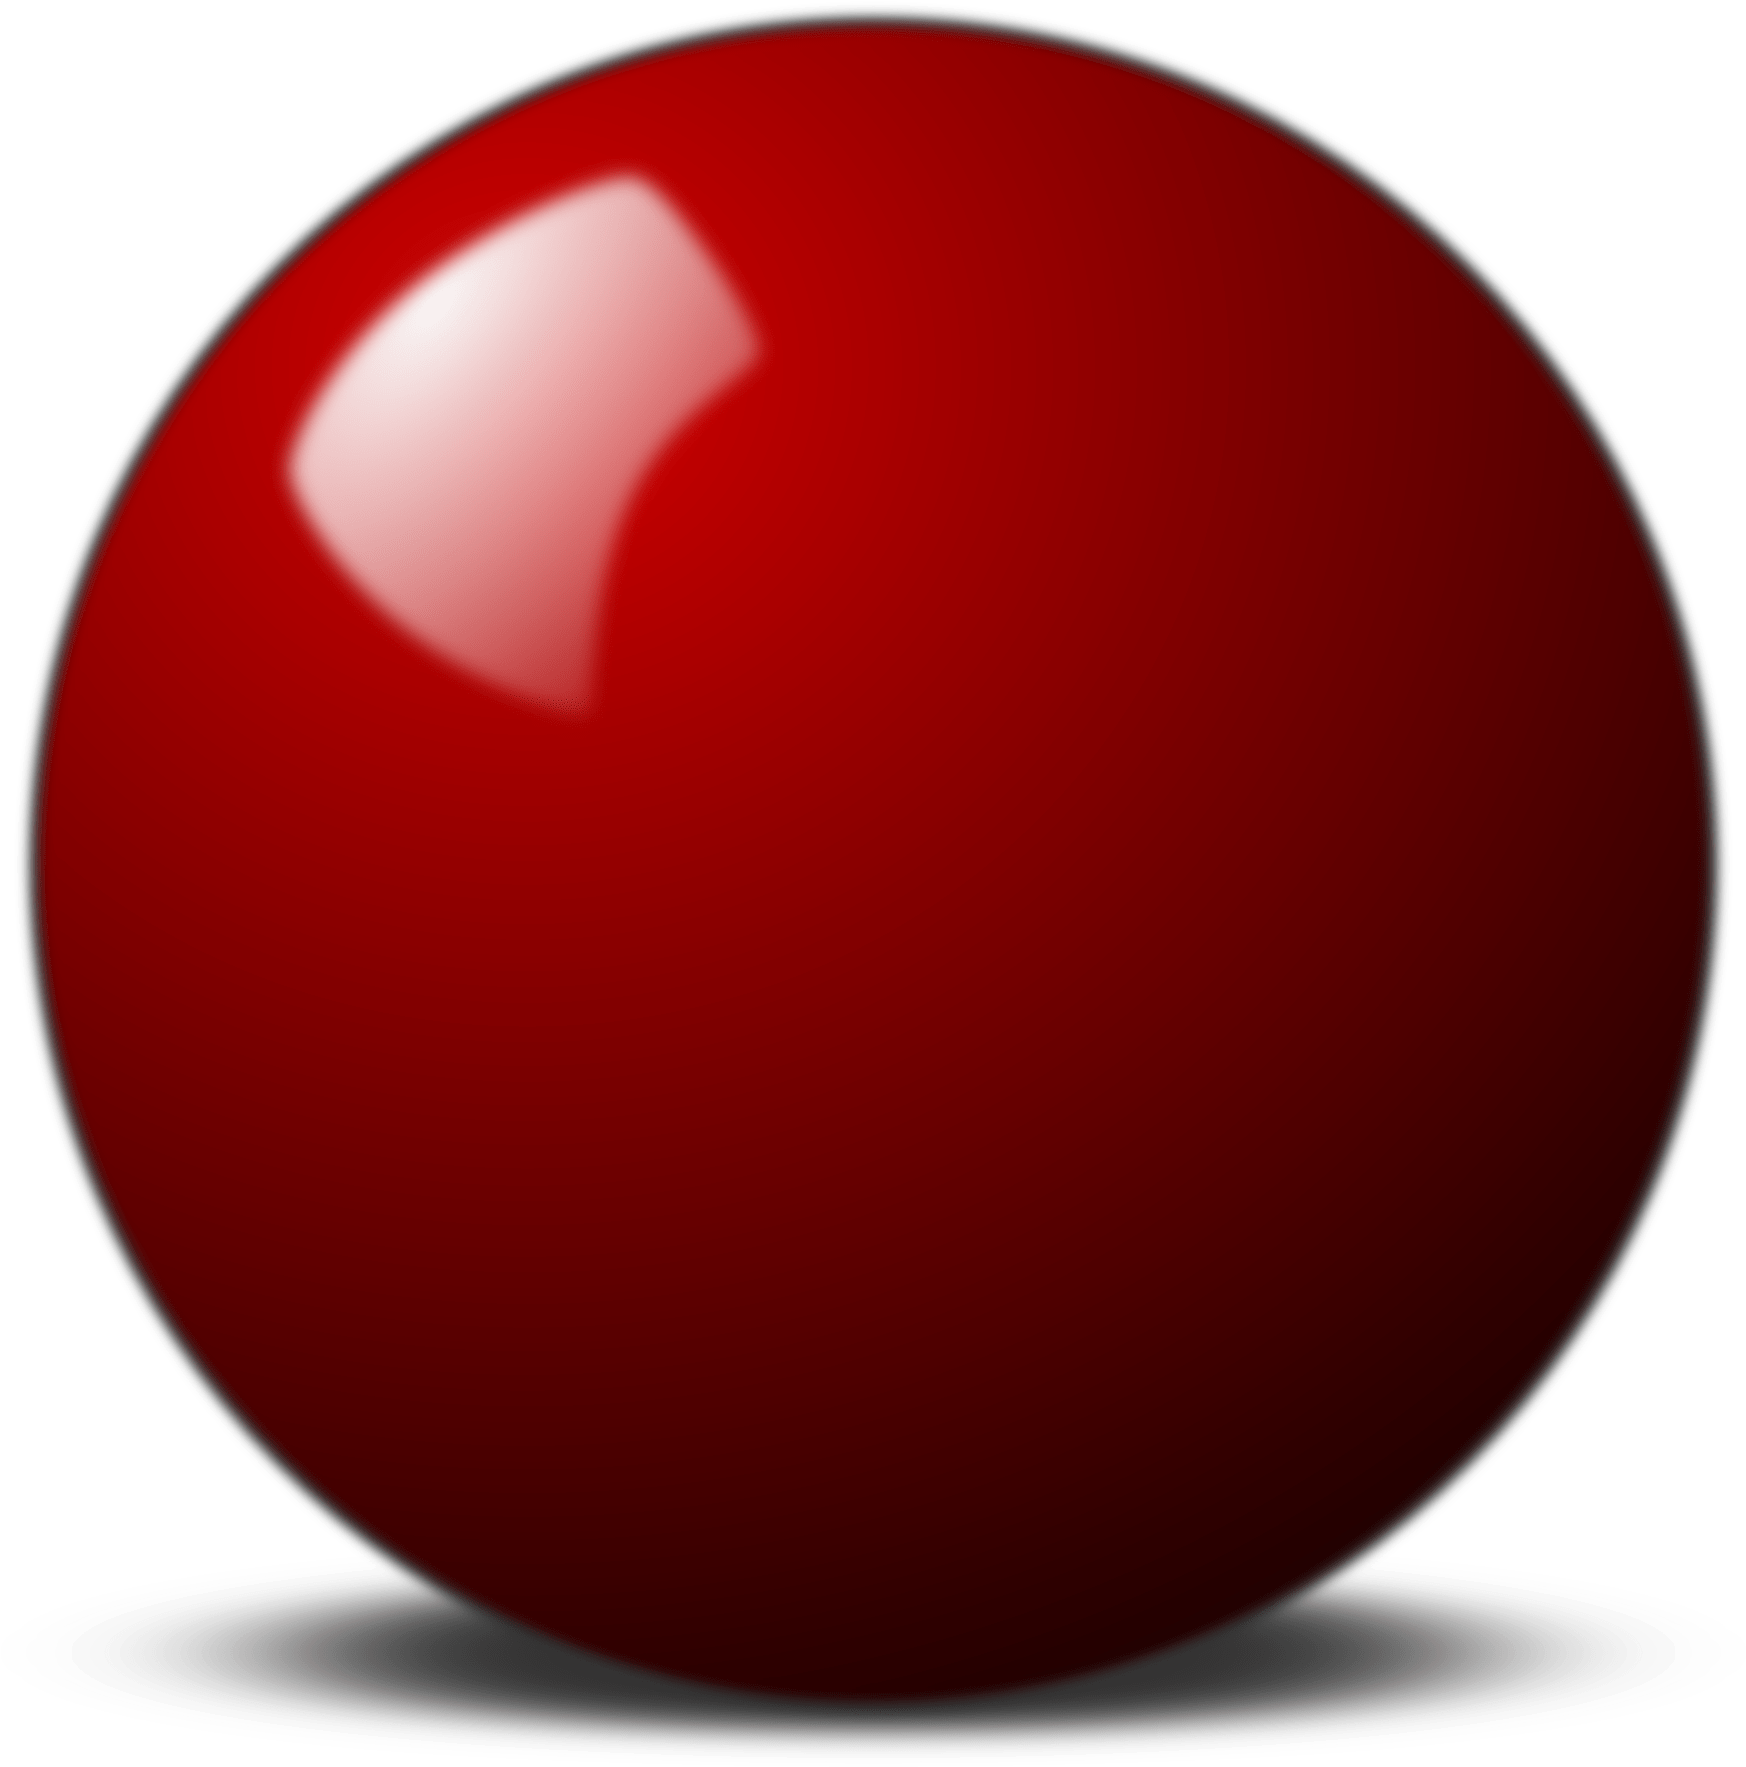 Billiard Red Balls PNG HD Quality